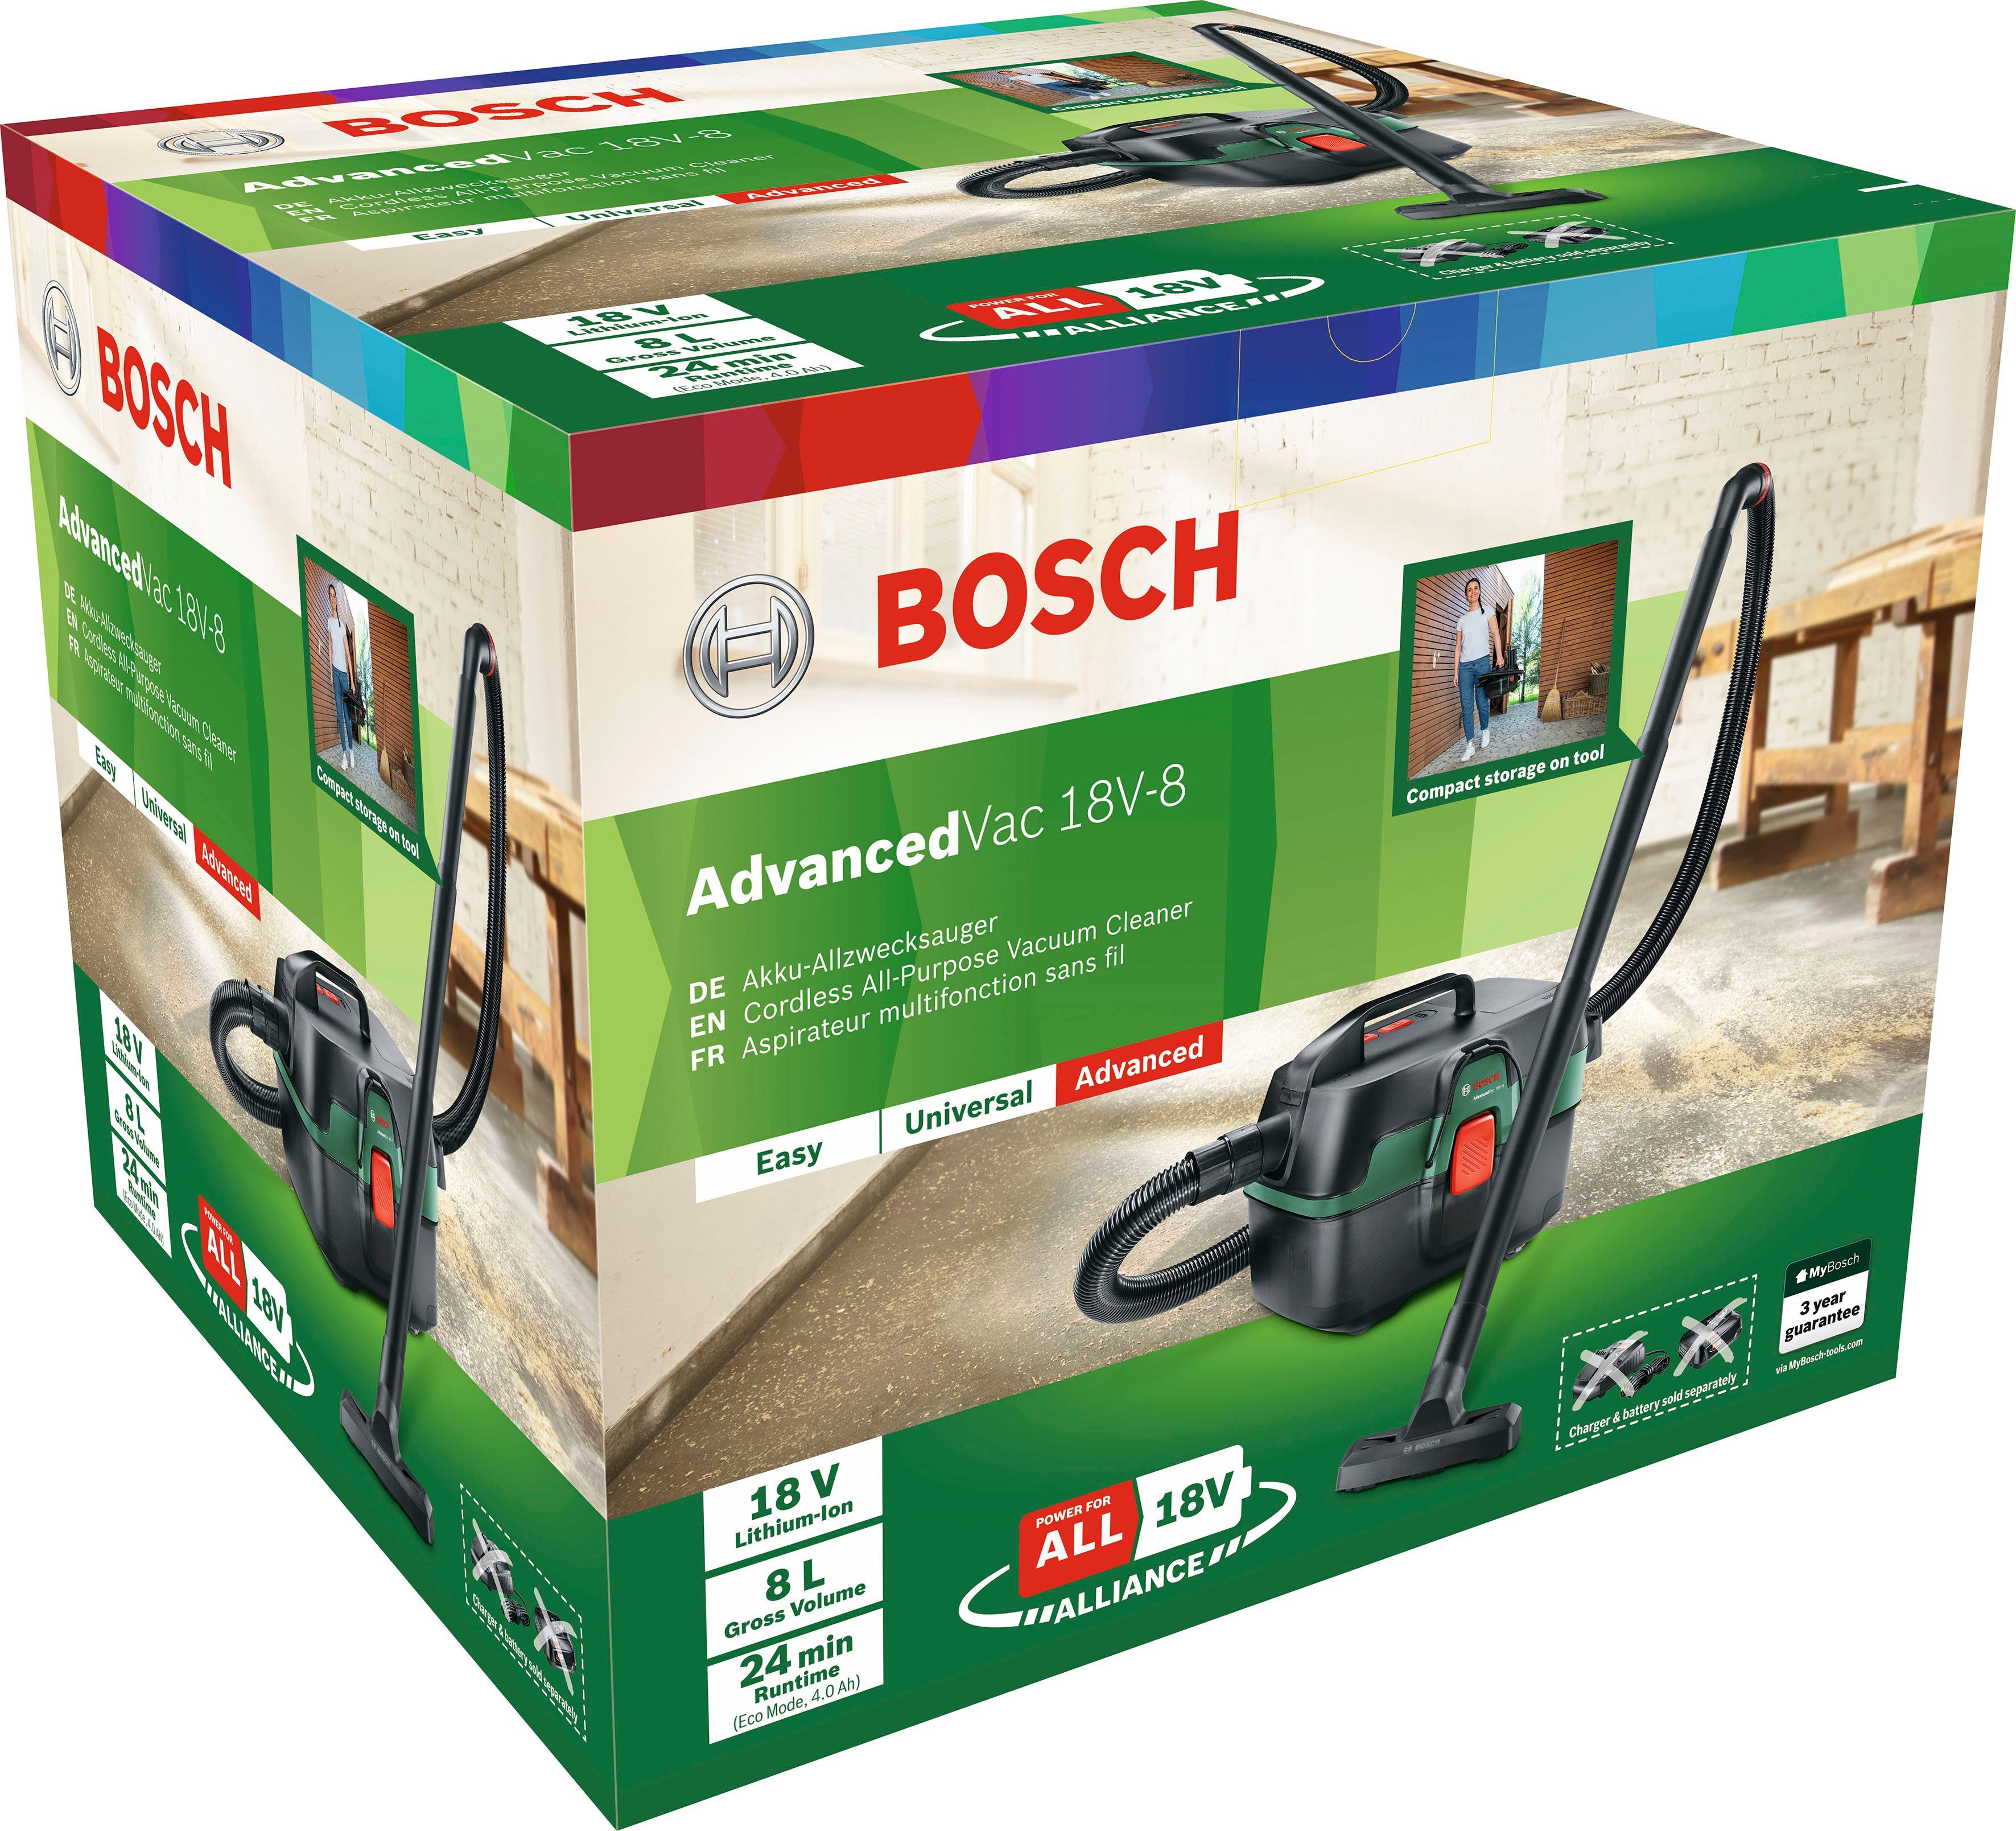 Bosch & Ladegerät 18V-8, ohne Akku AdvancedVac Home Nass-Trocken-Akkusauger und Beutel, mit Garden